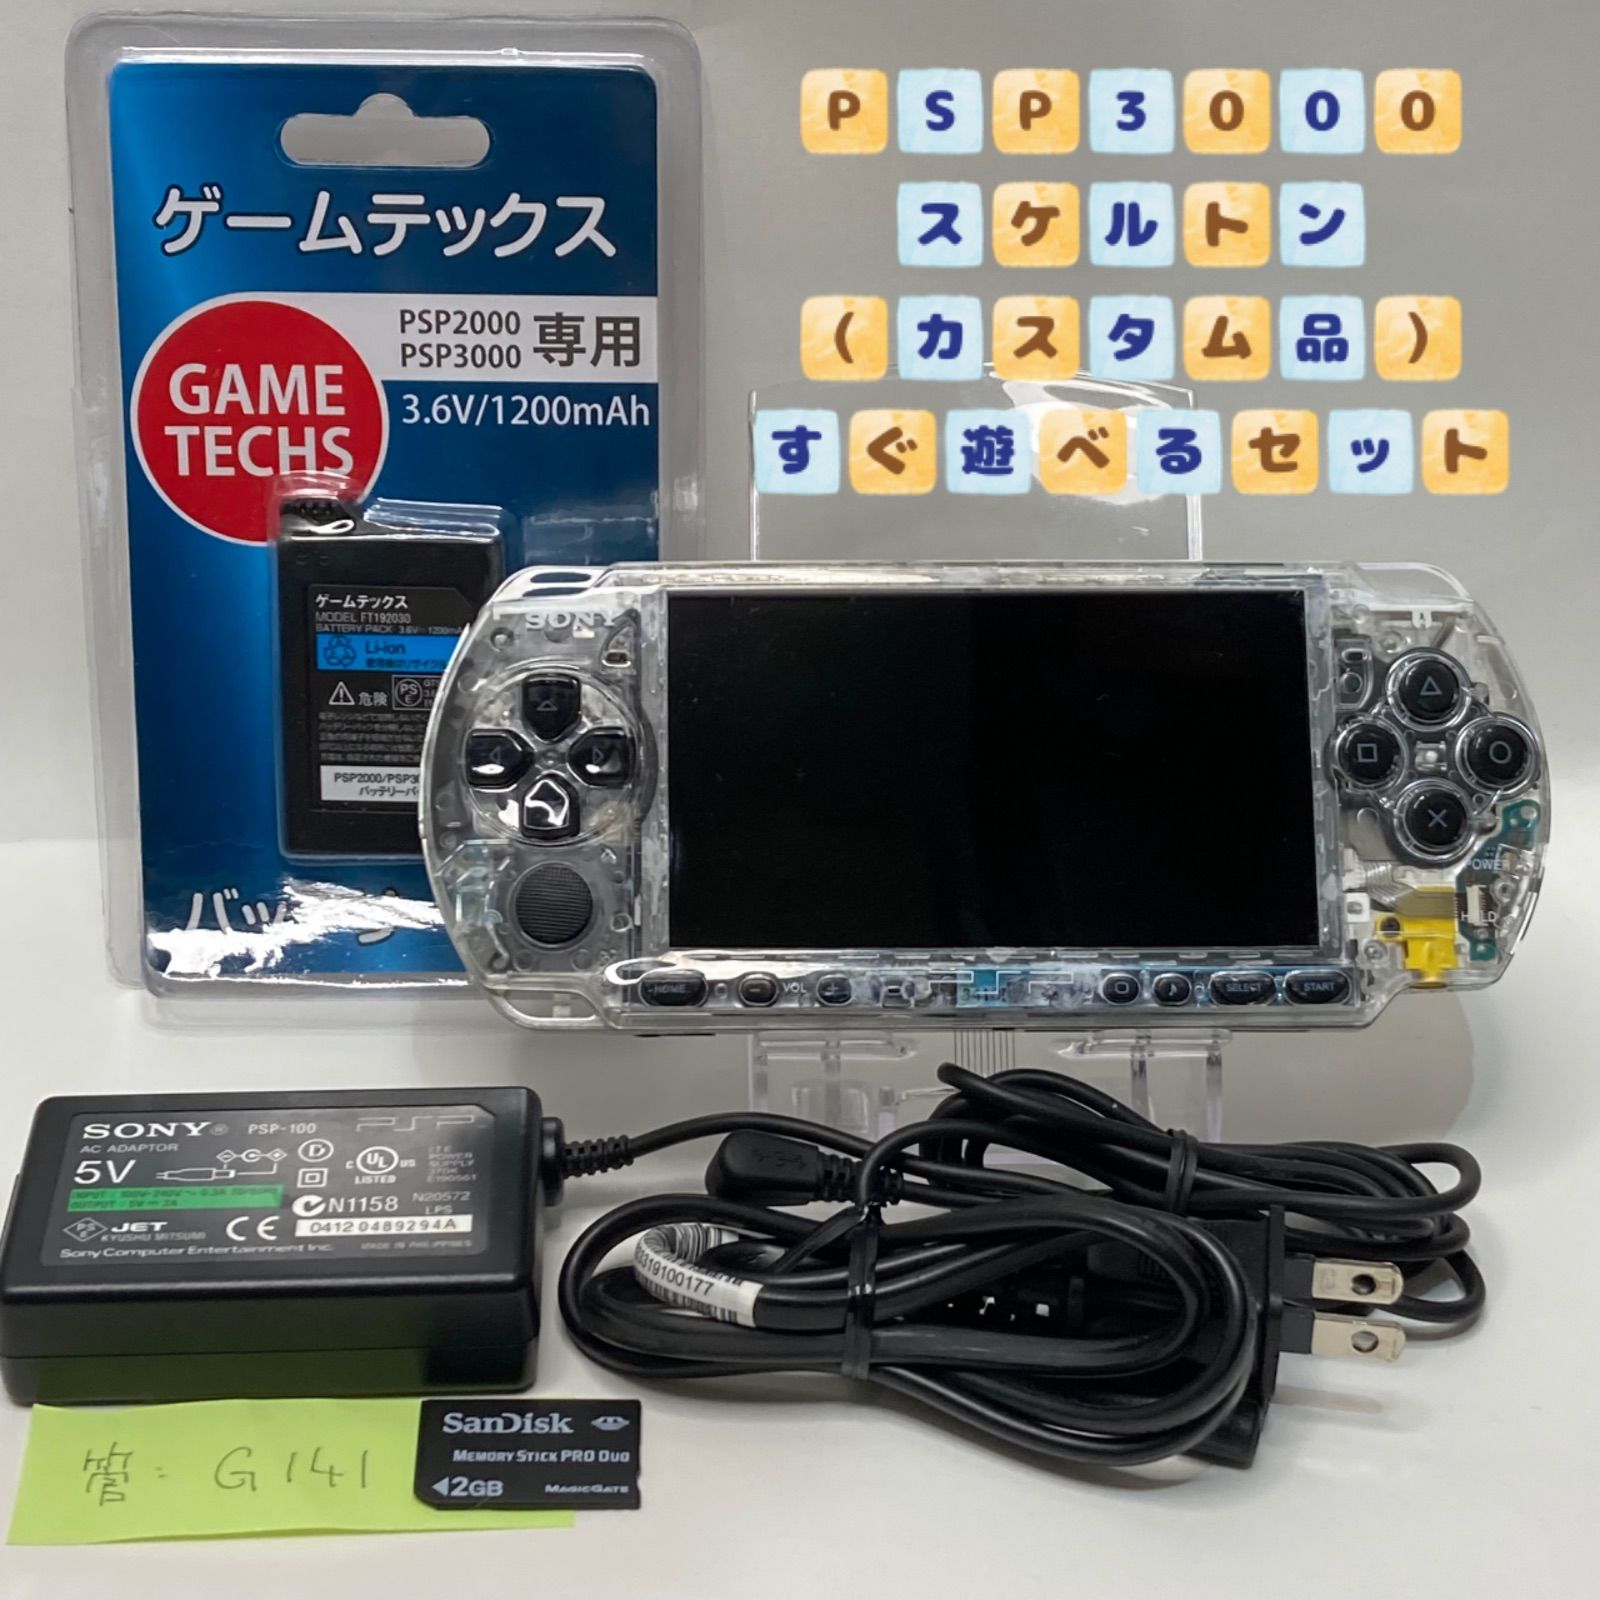 PSP 3000 すぐ遊べるセット【美品・カスタム・改造】スケルトン